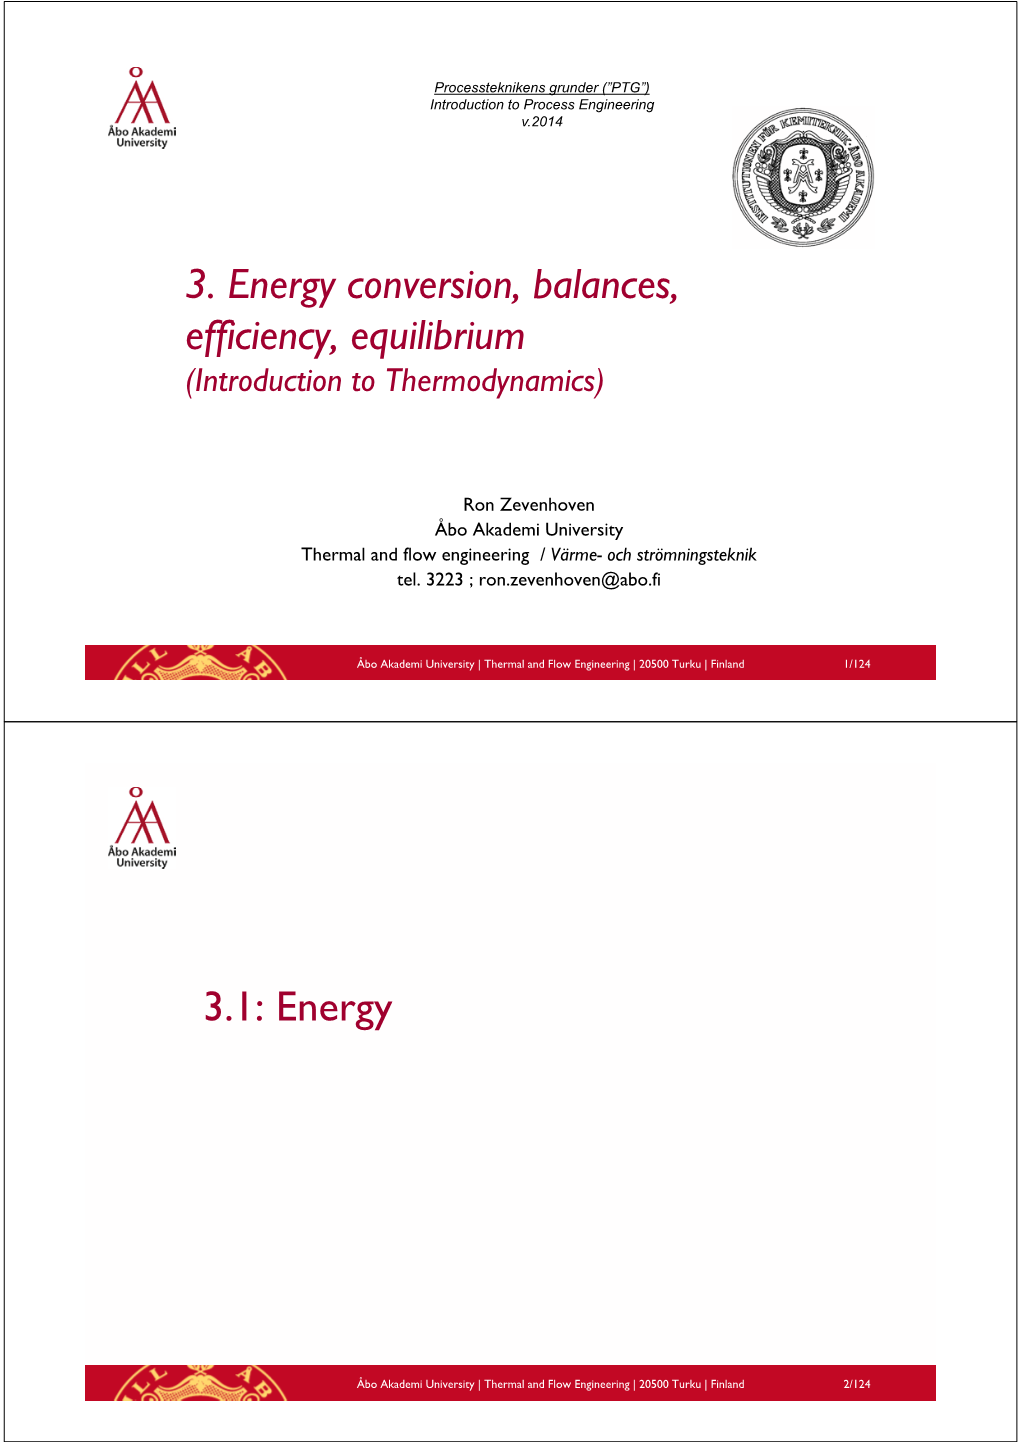 3. Energy Conversion, Balances, Efficiency, Equilibrium (Introduction to Thermodynamics)